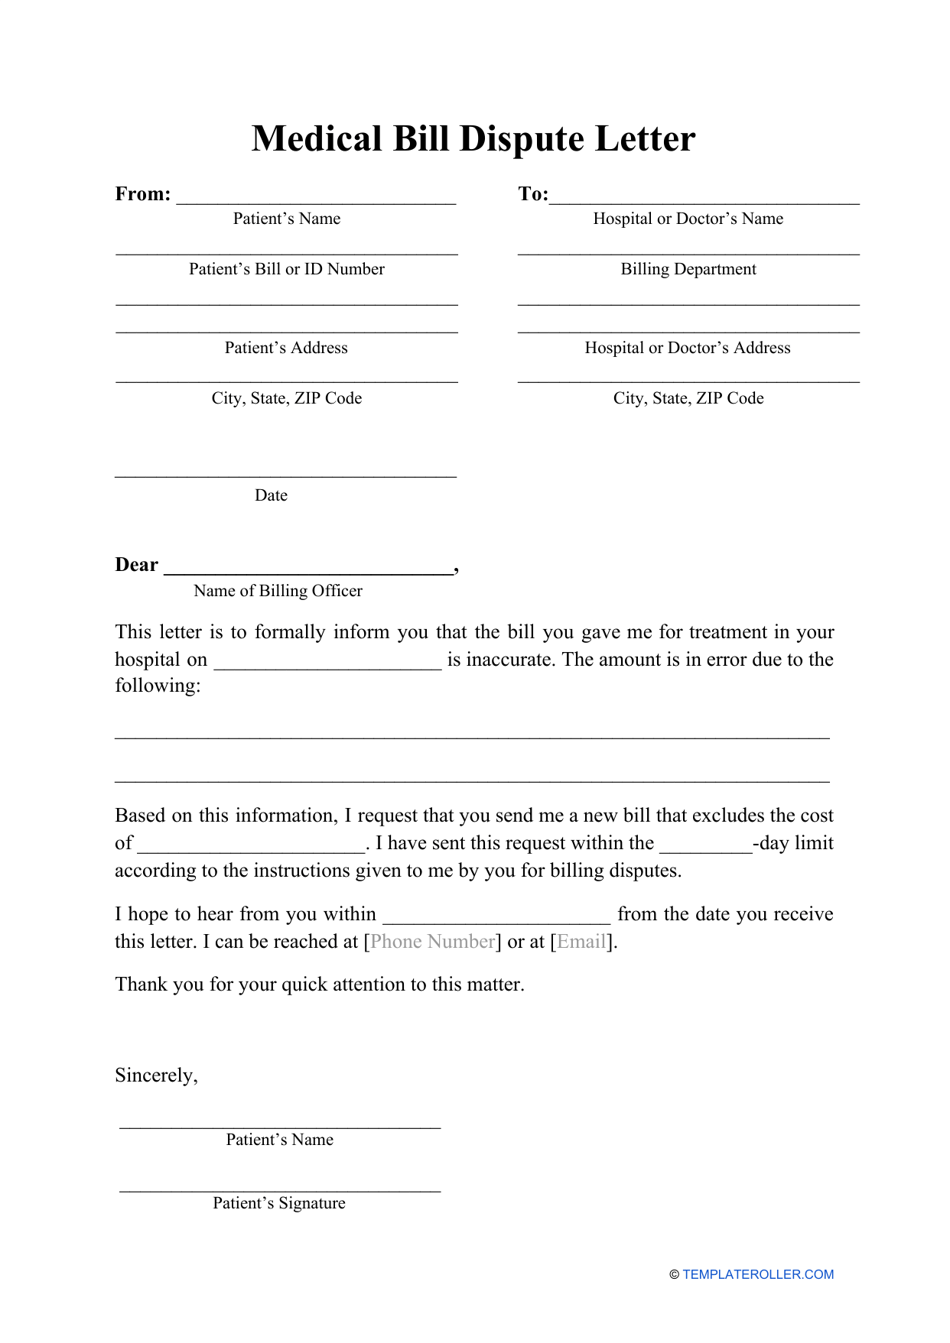 Medical Bill Dispute Letter Template Download Printable PDF